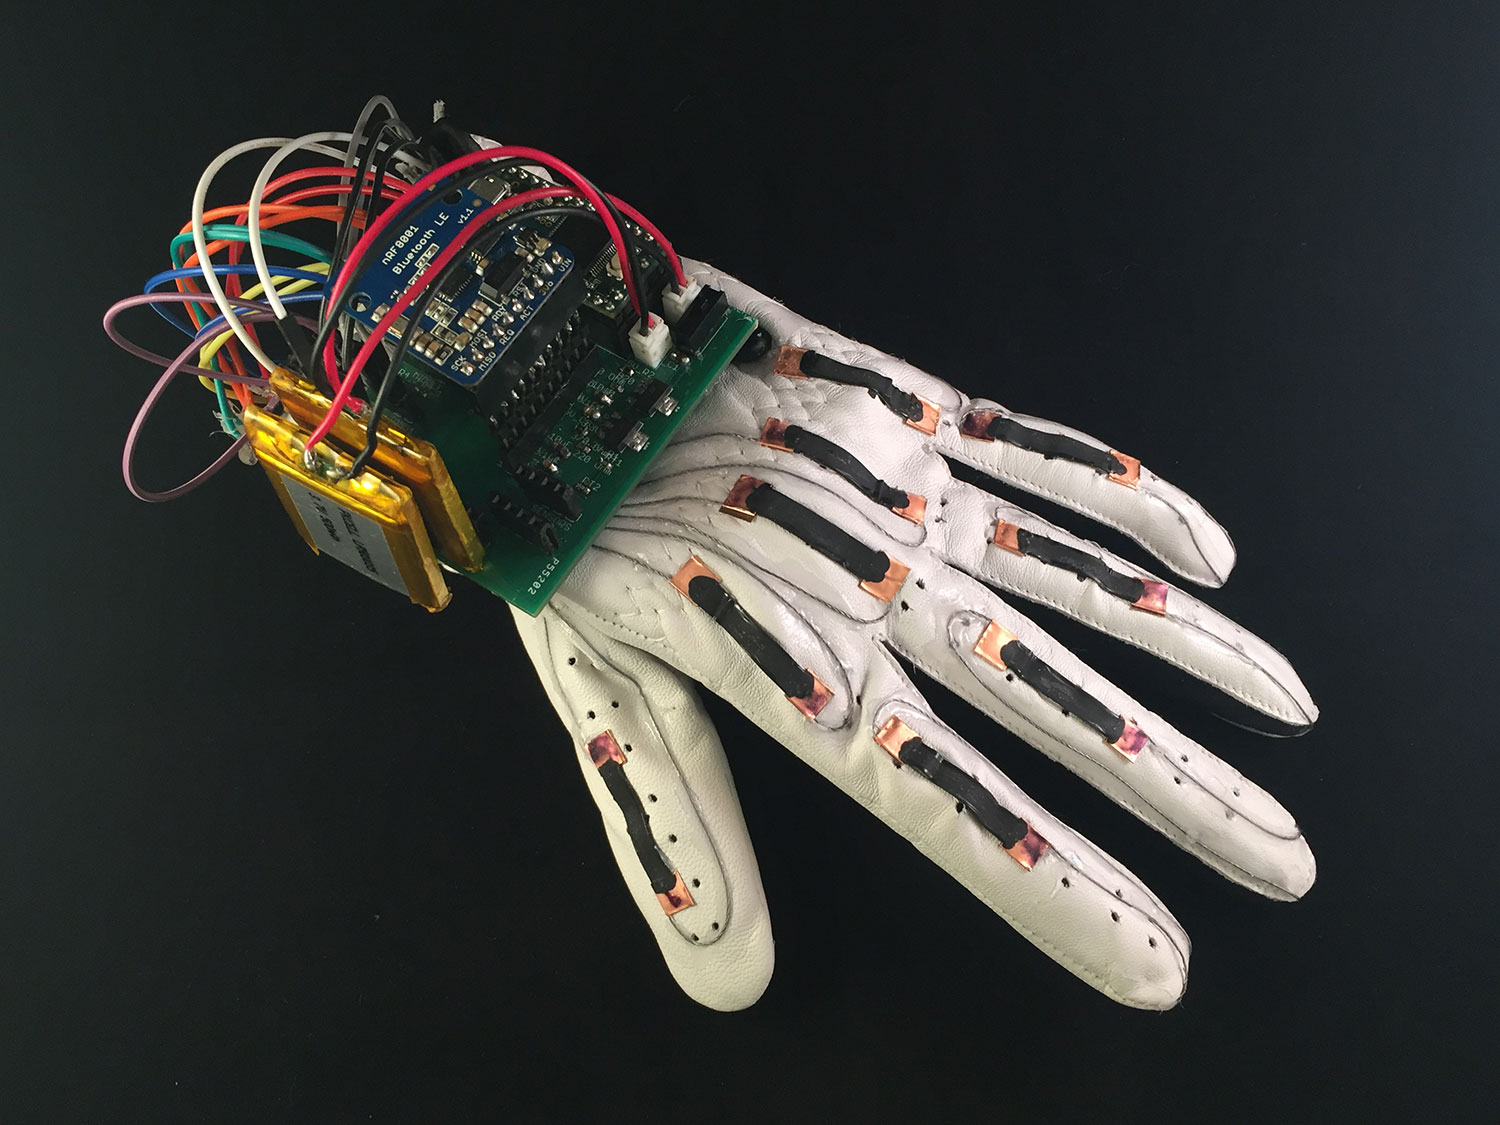 Sensor glove translates sign language, mimics gestures